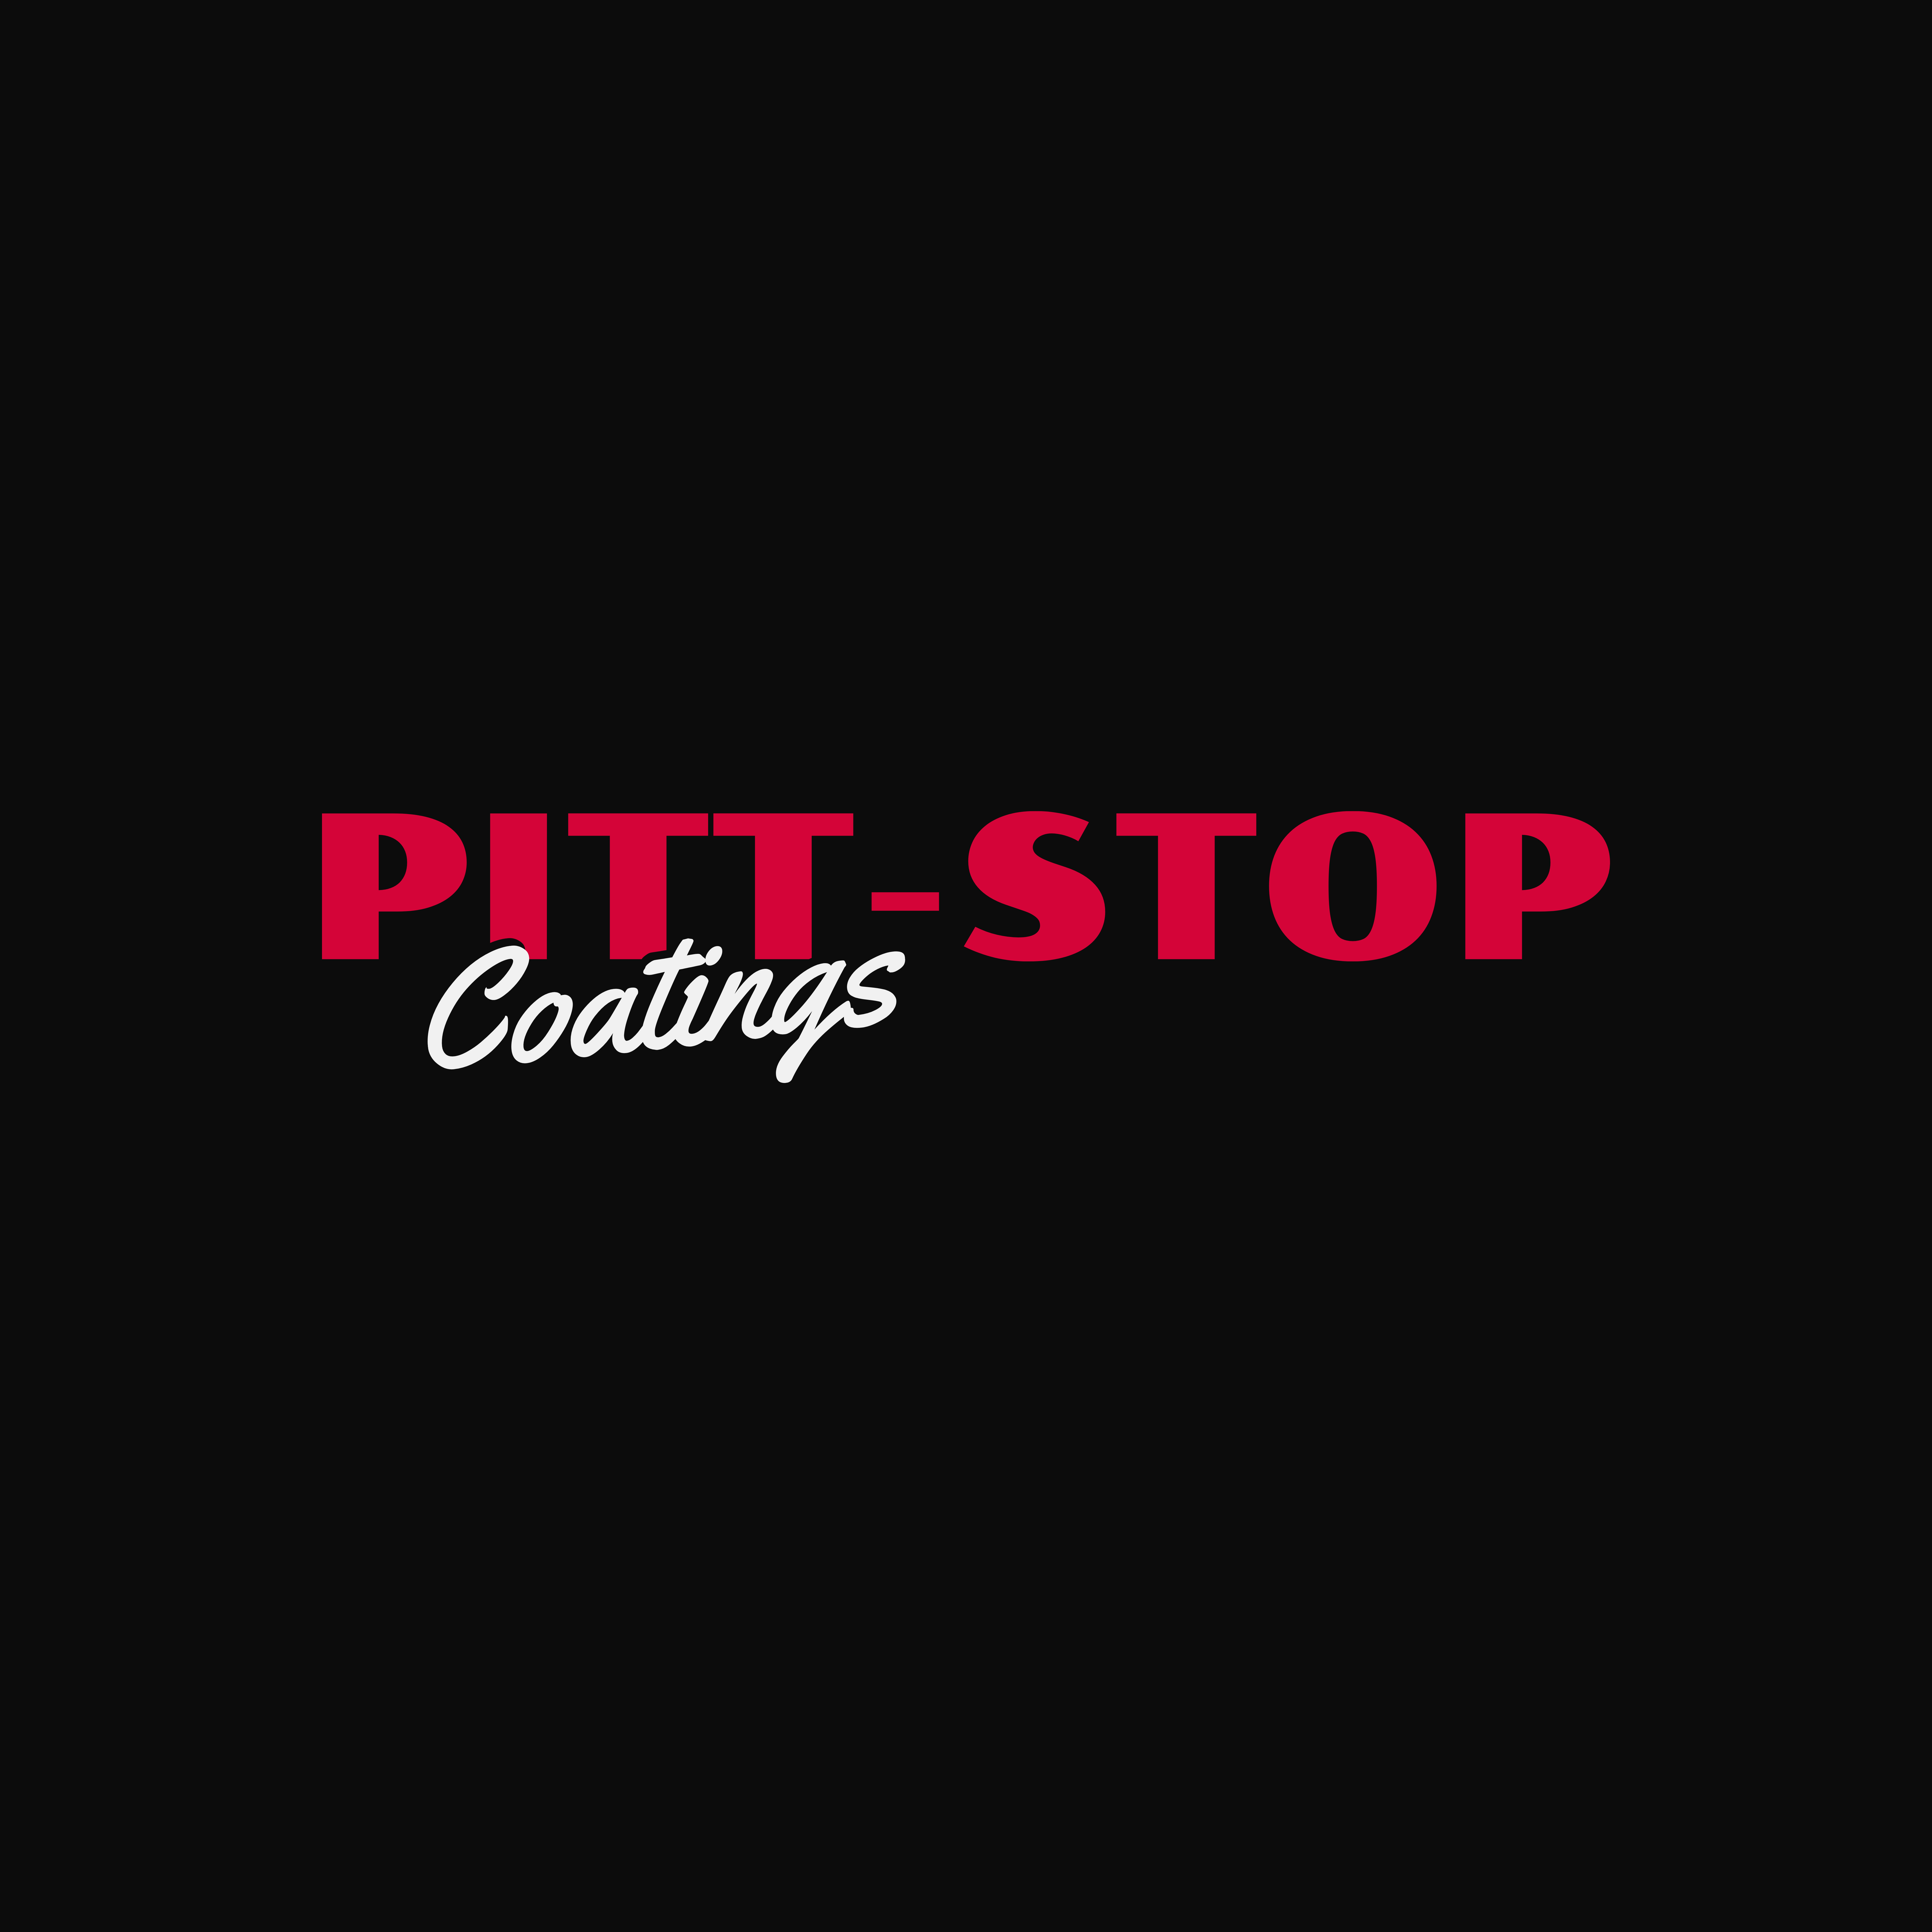 Pitt-Stop Coatings Logo